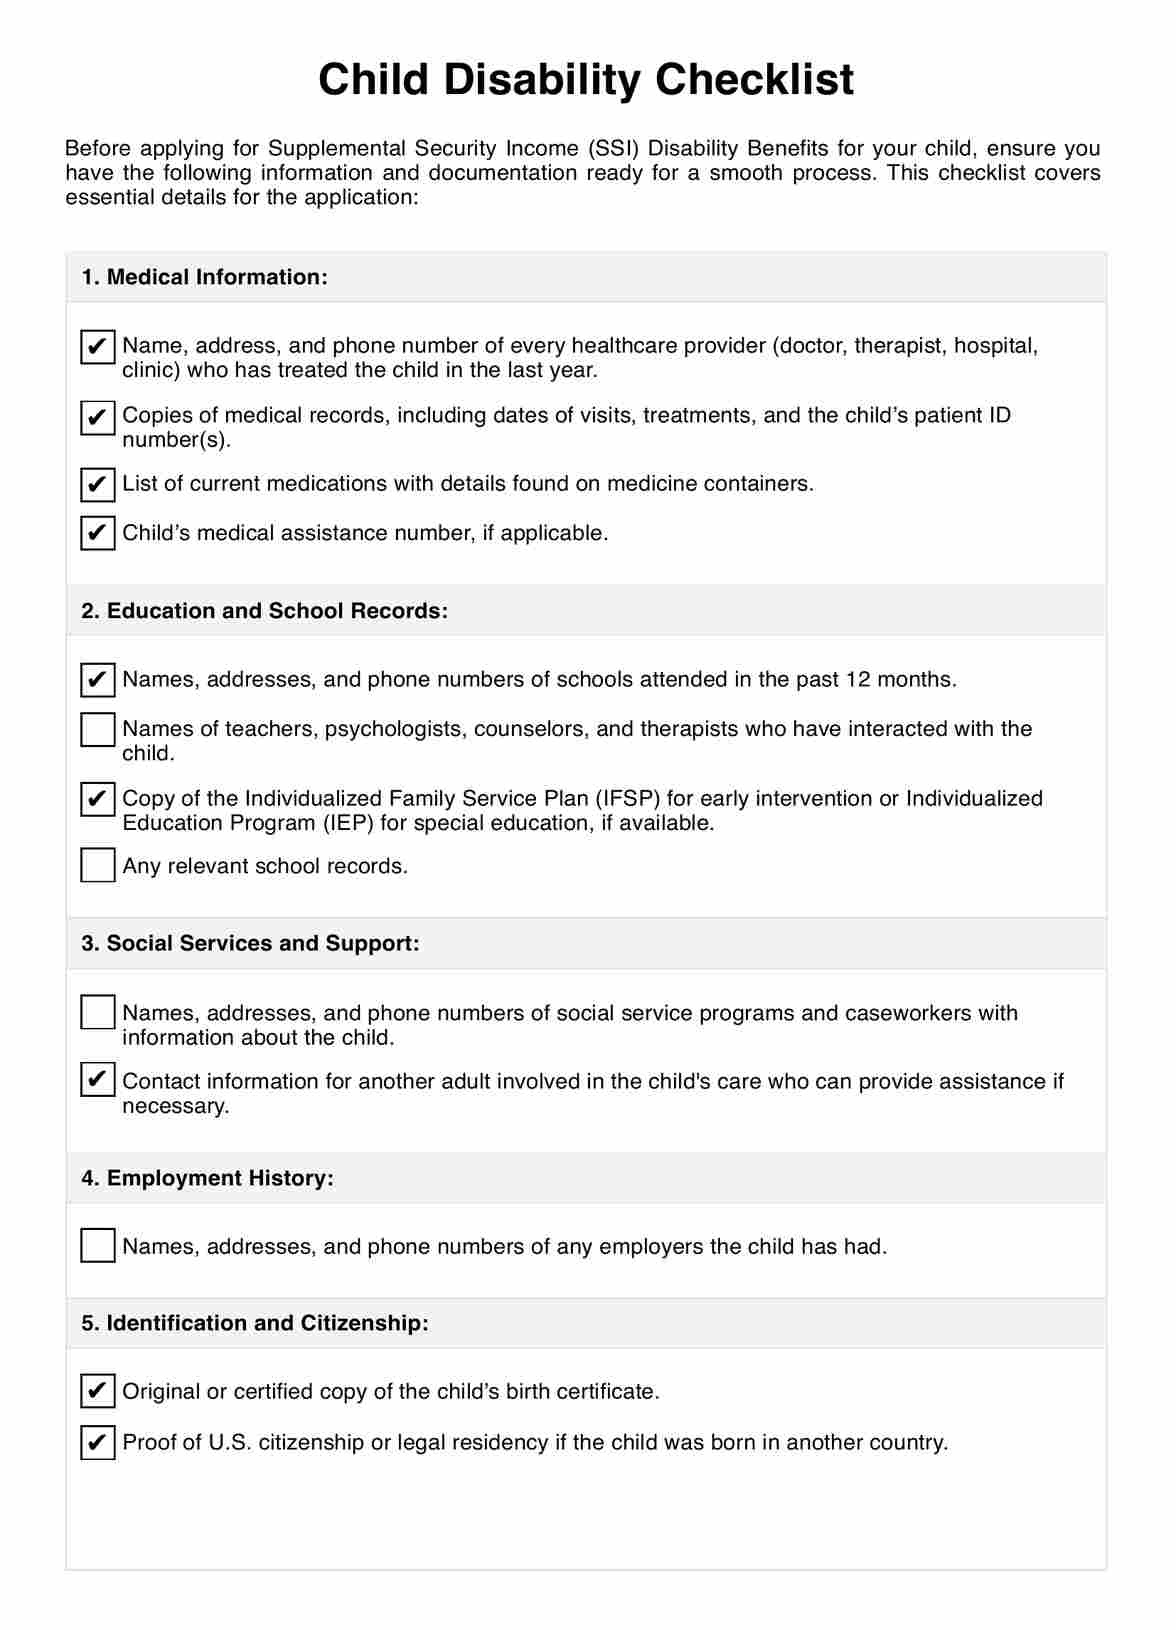 Child Disability Checklist PDF Example